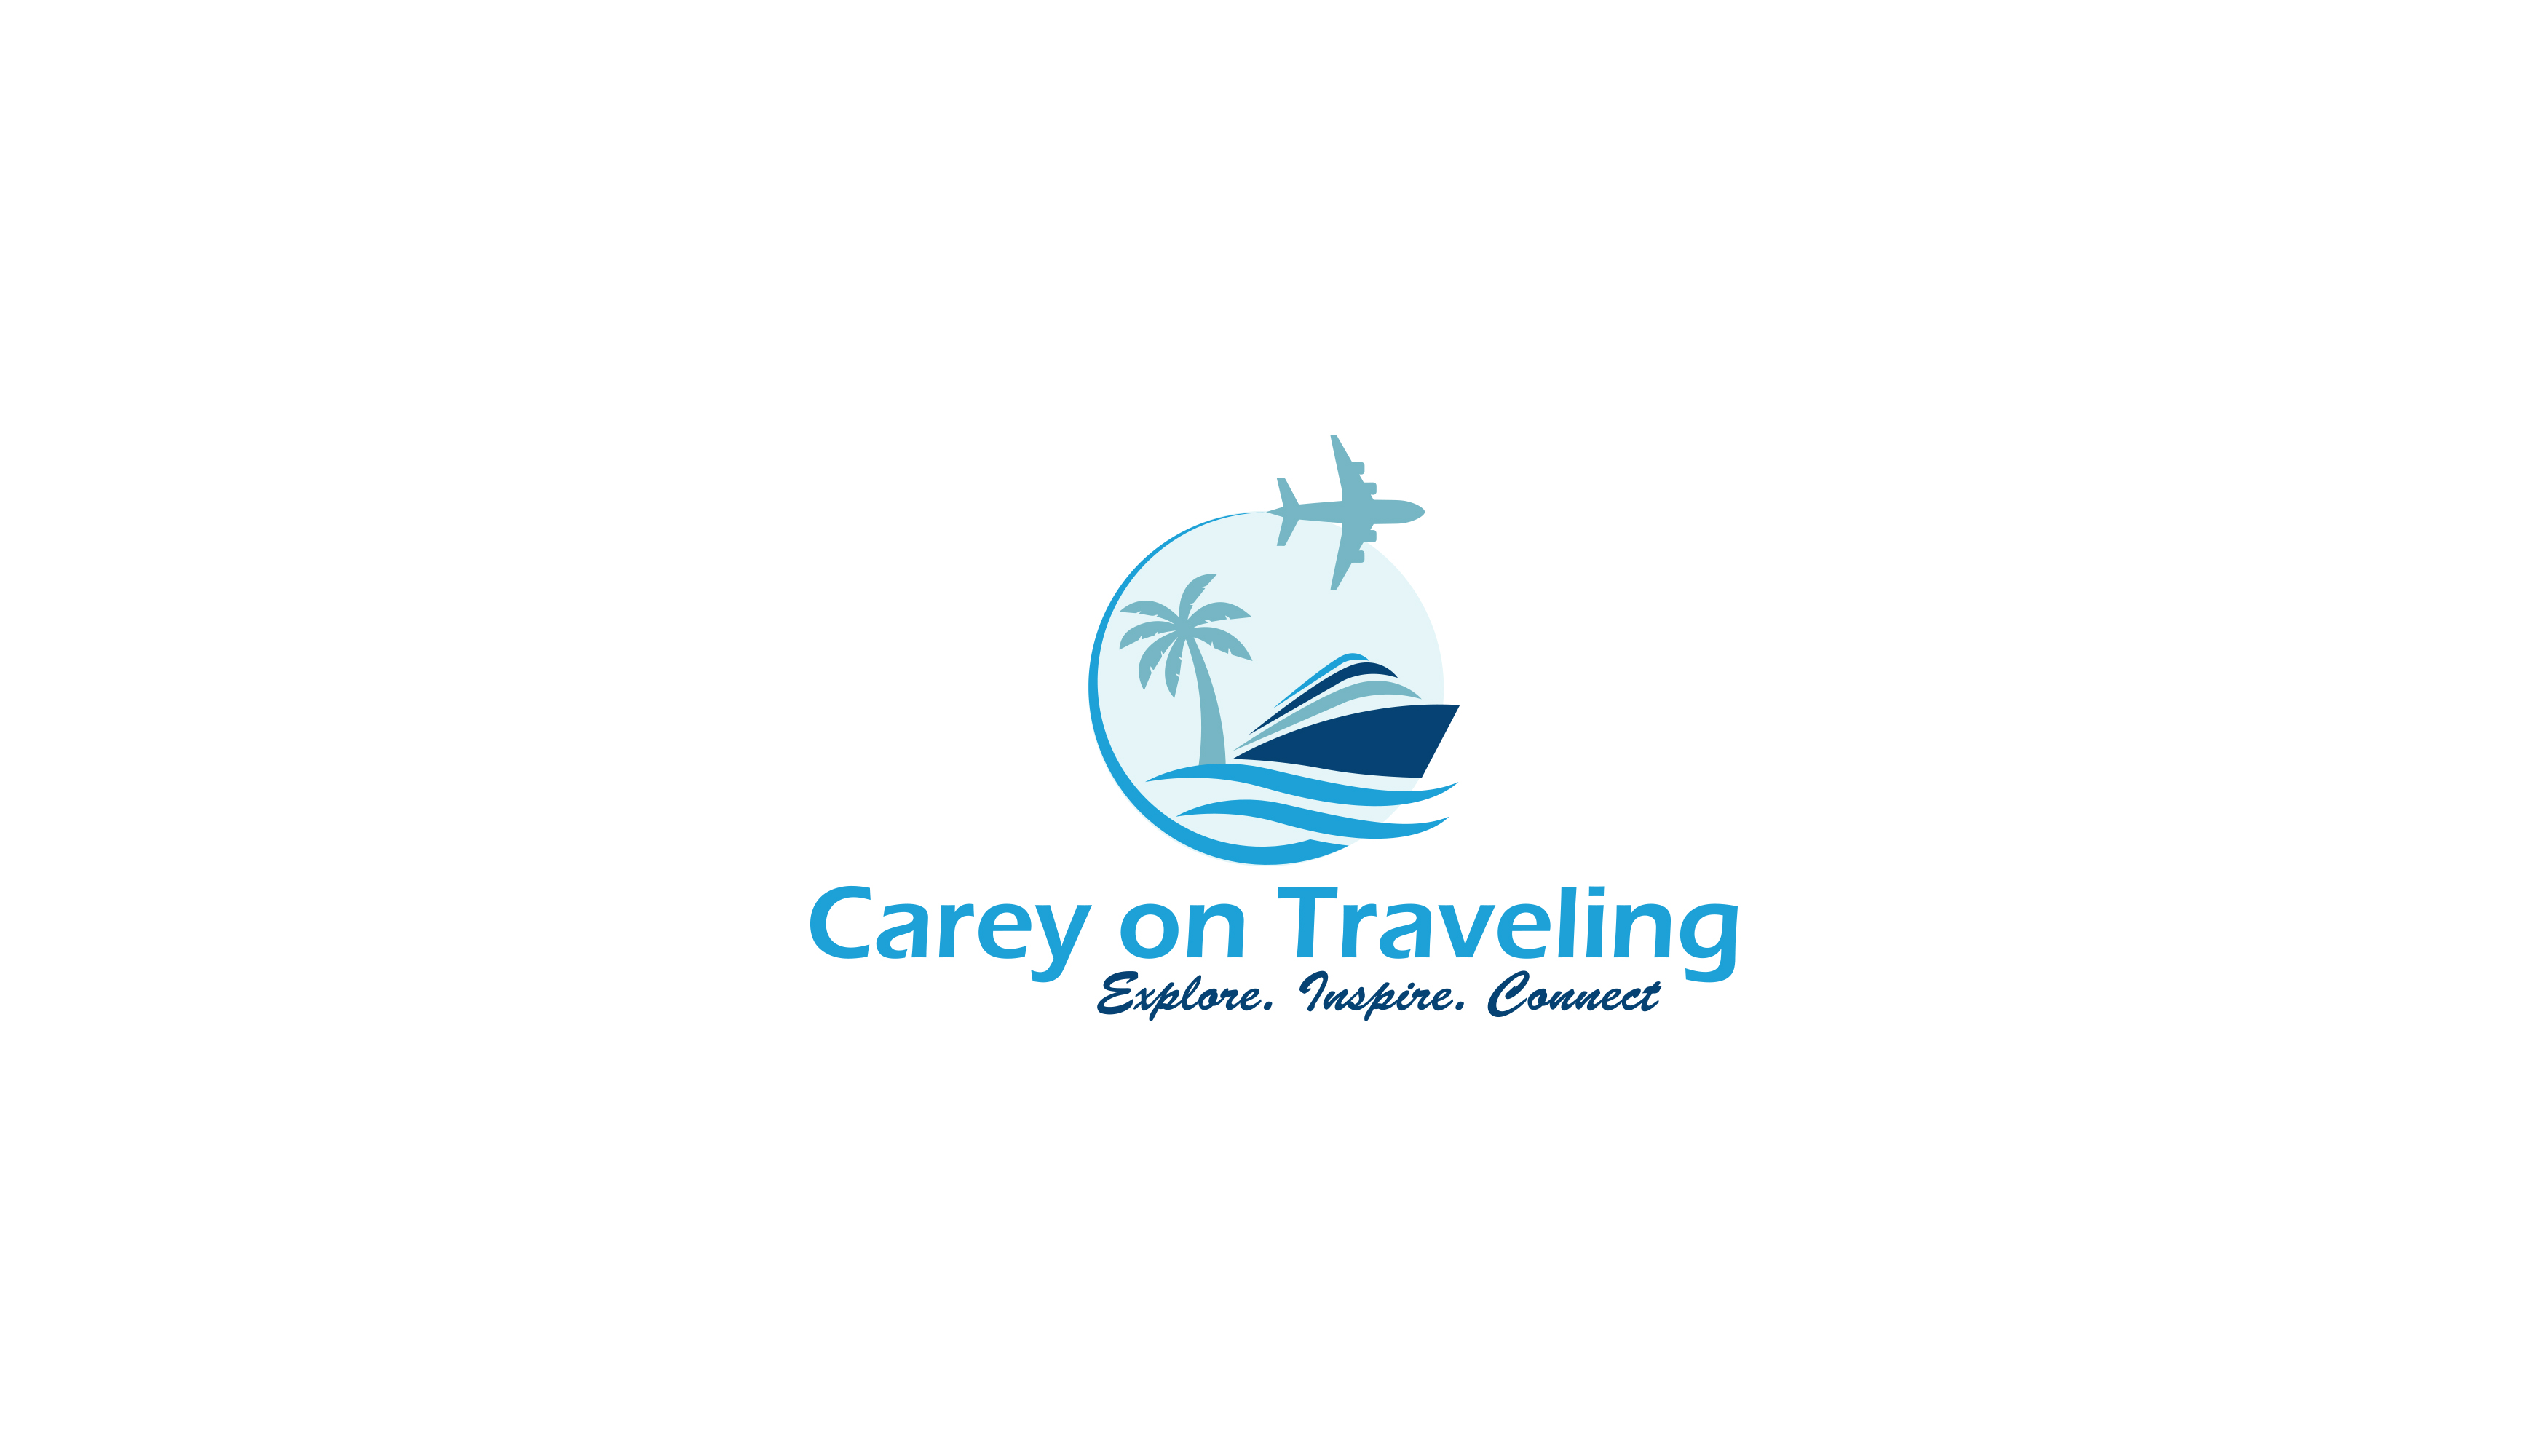 Carey On Traveling | Travel Agency Logo | Travel Agent Logo 